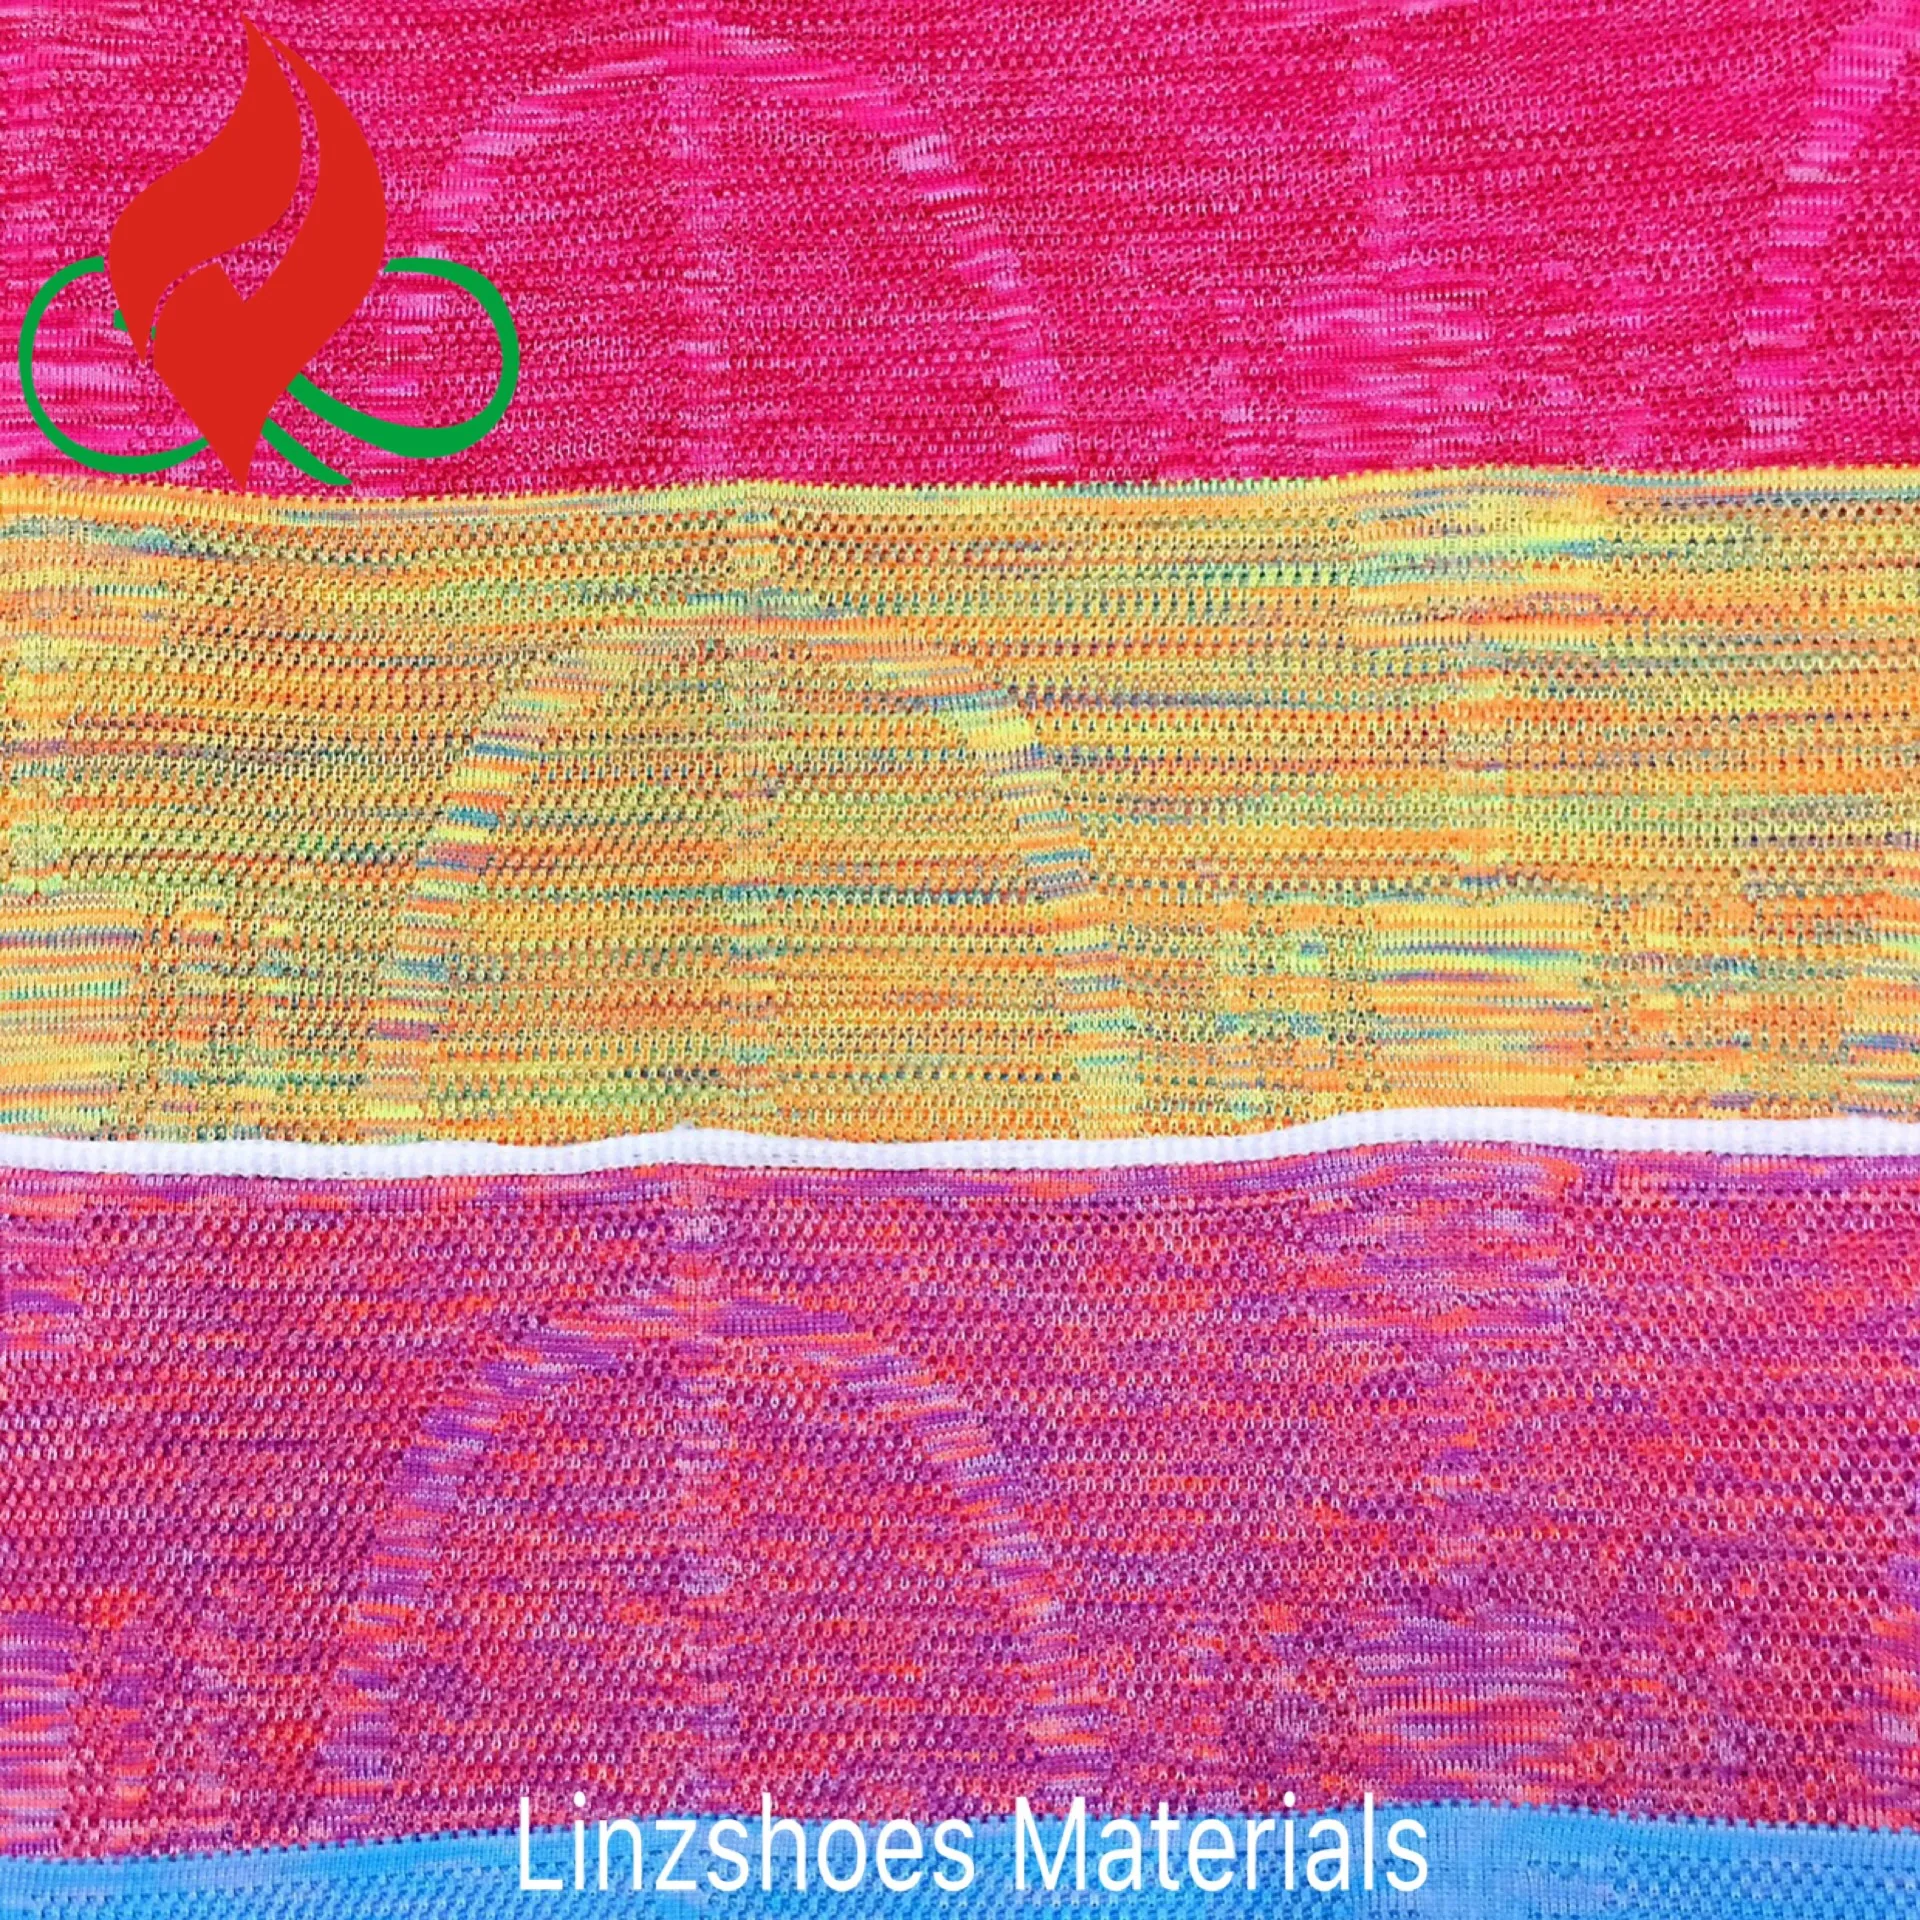 
LNZ-F002-2 Vest2 красная/Розовая вязаная верхняя гибкая обувь, дышащая Спортивная обувь 